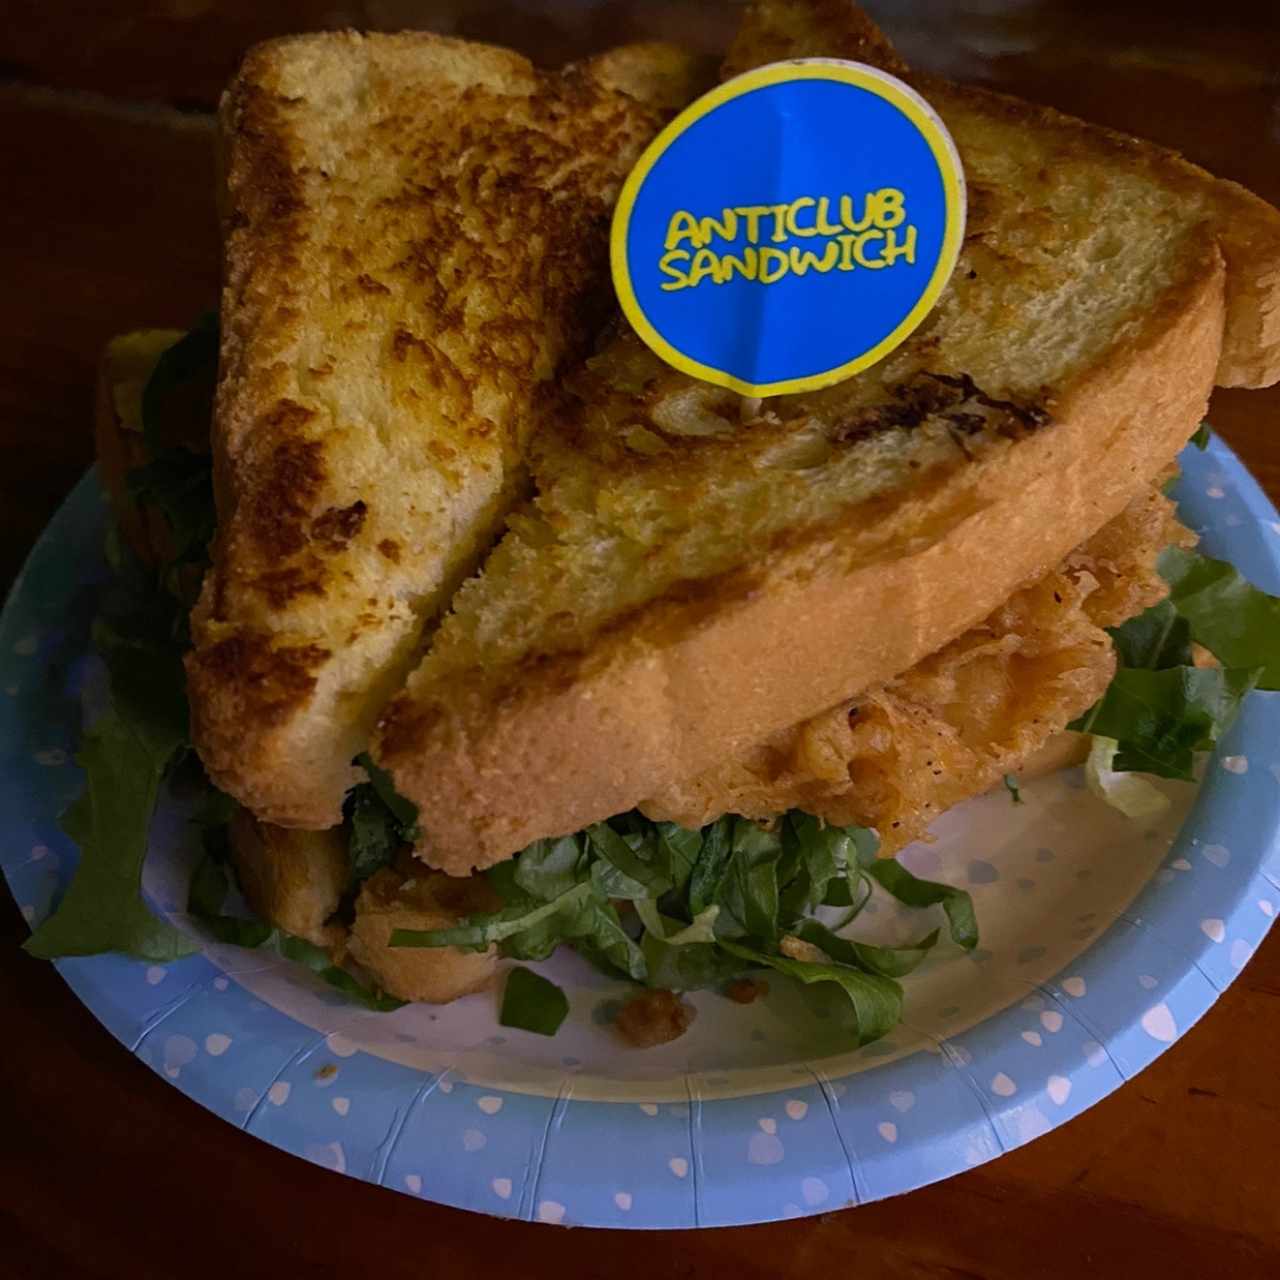 Anticlub sandwich